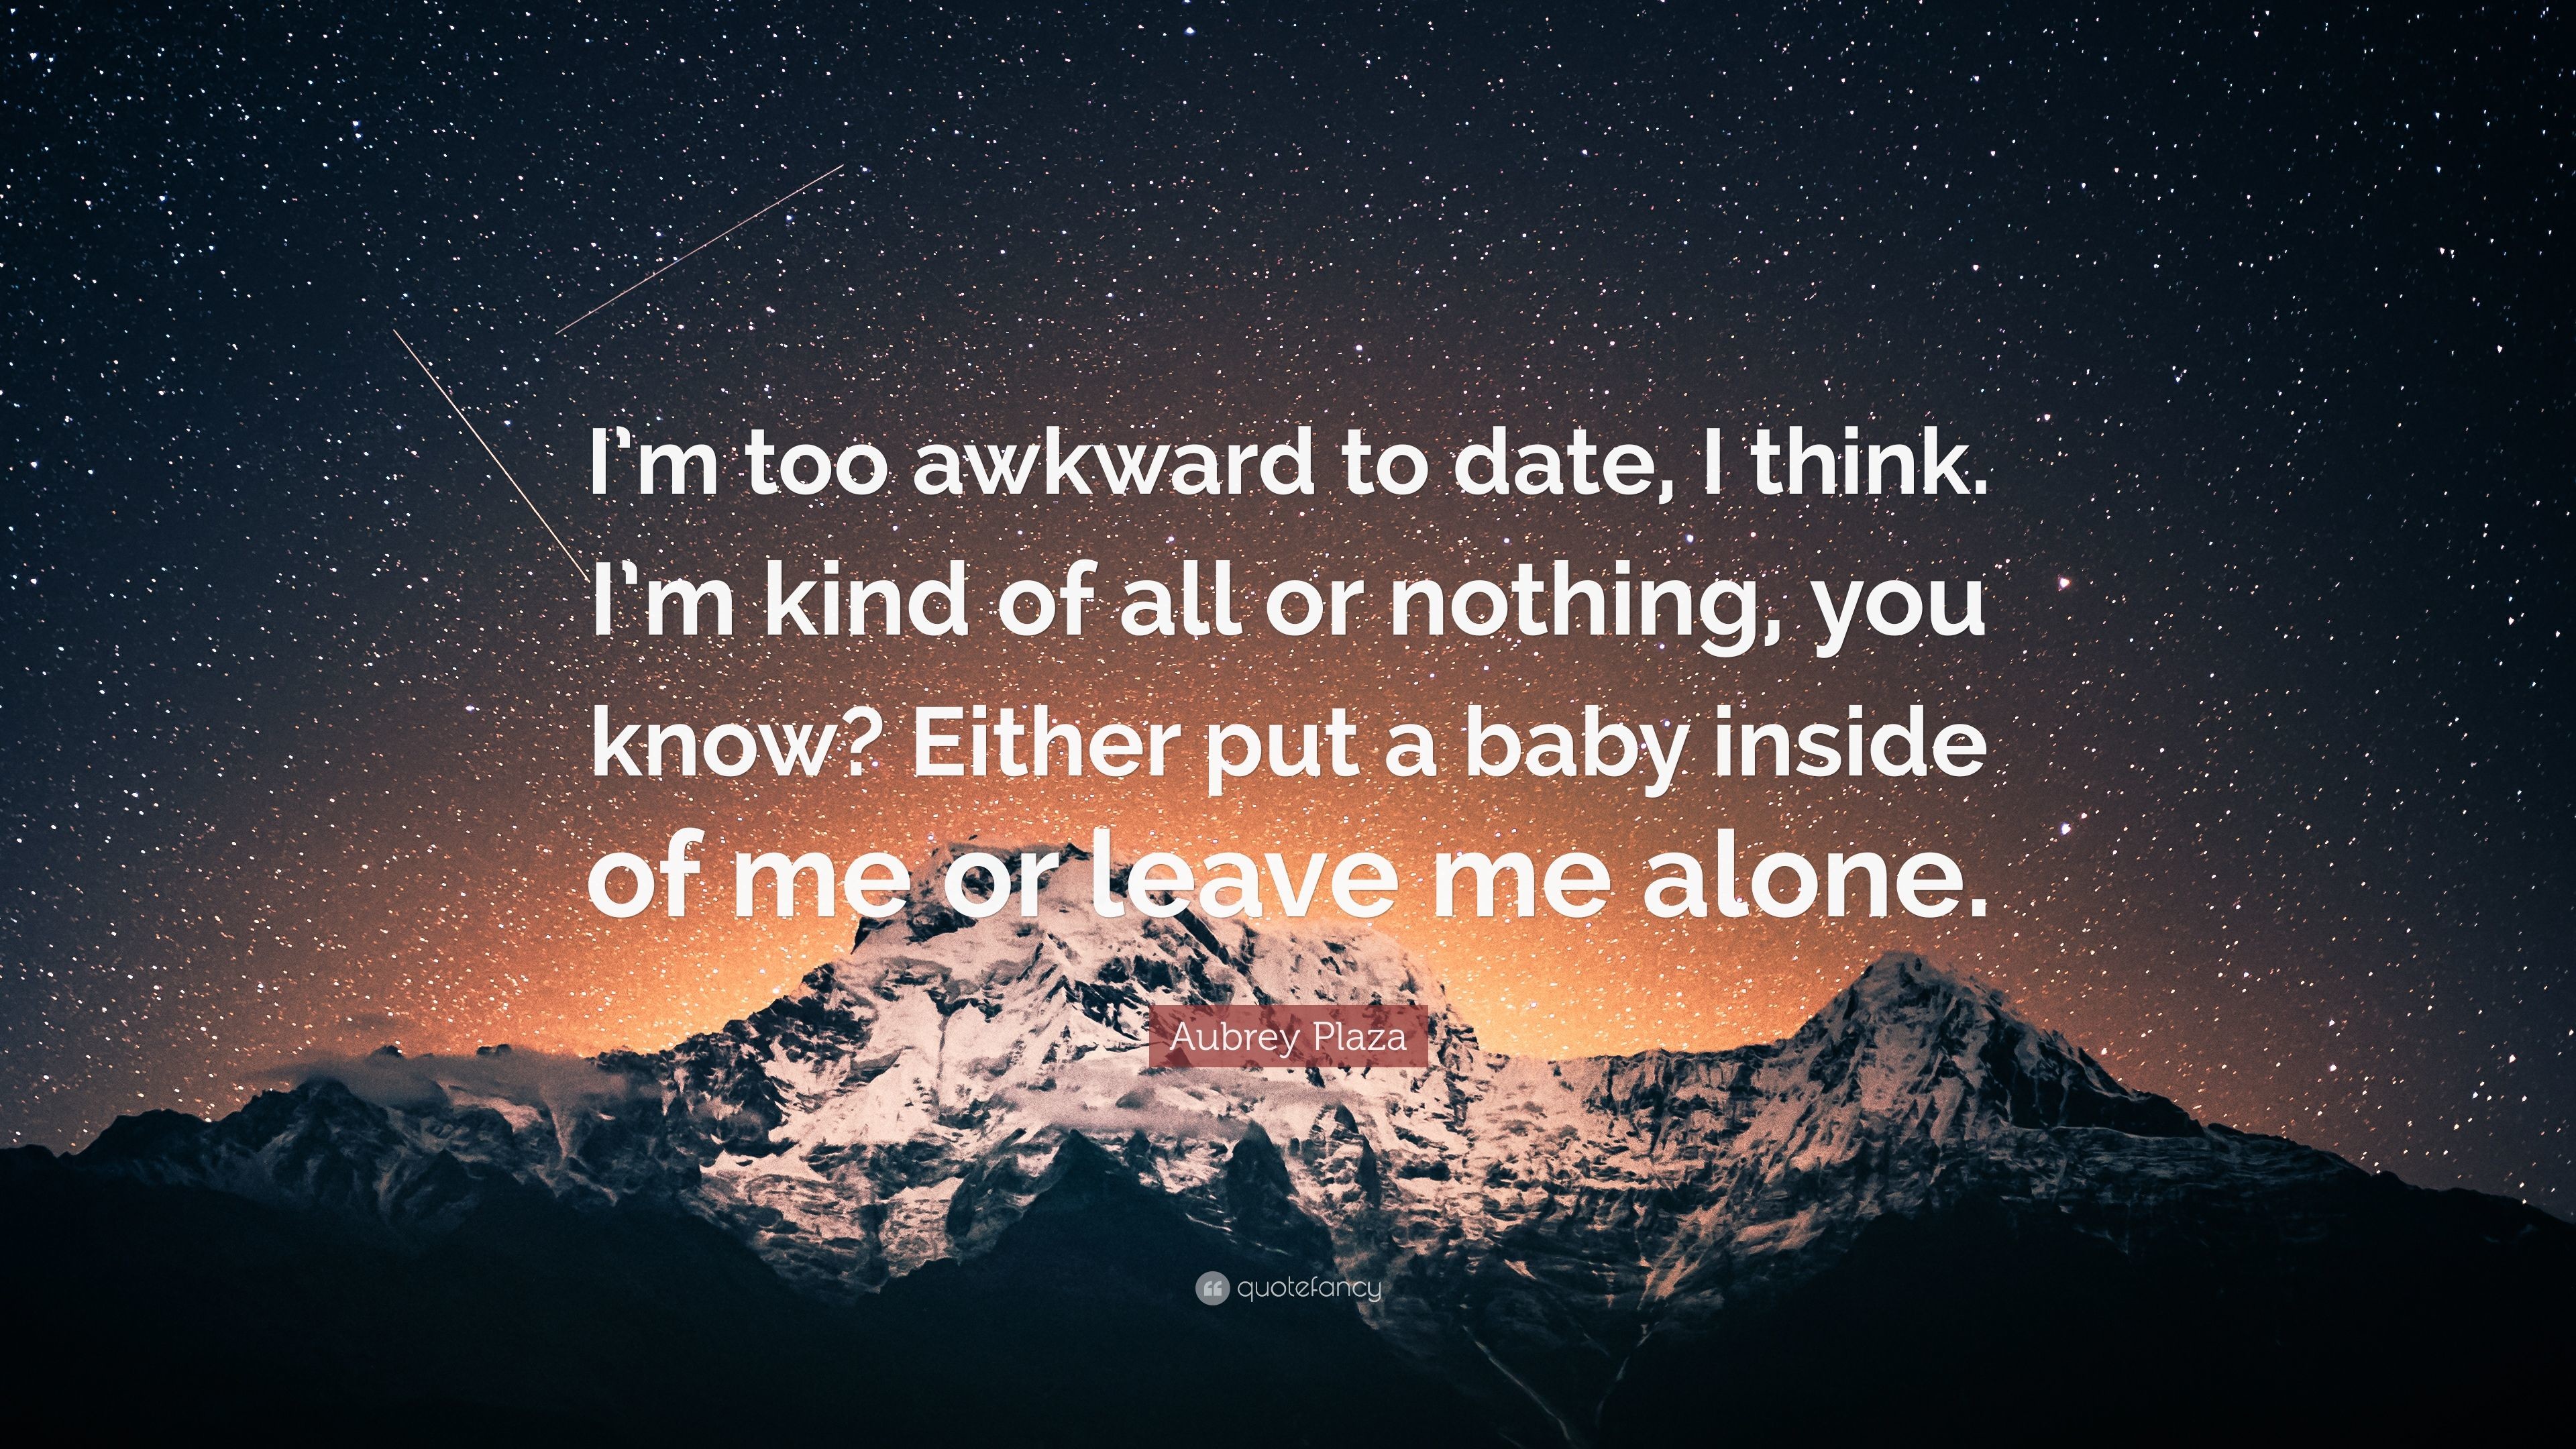 3840x2160 Aubrey Plaza Quote: “I'm too awkward to date, I think.